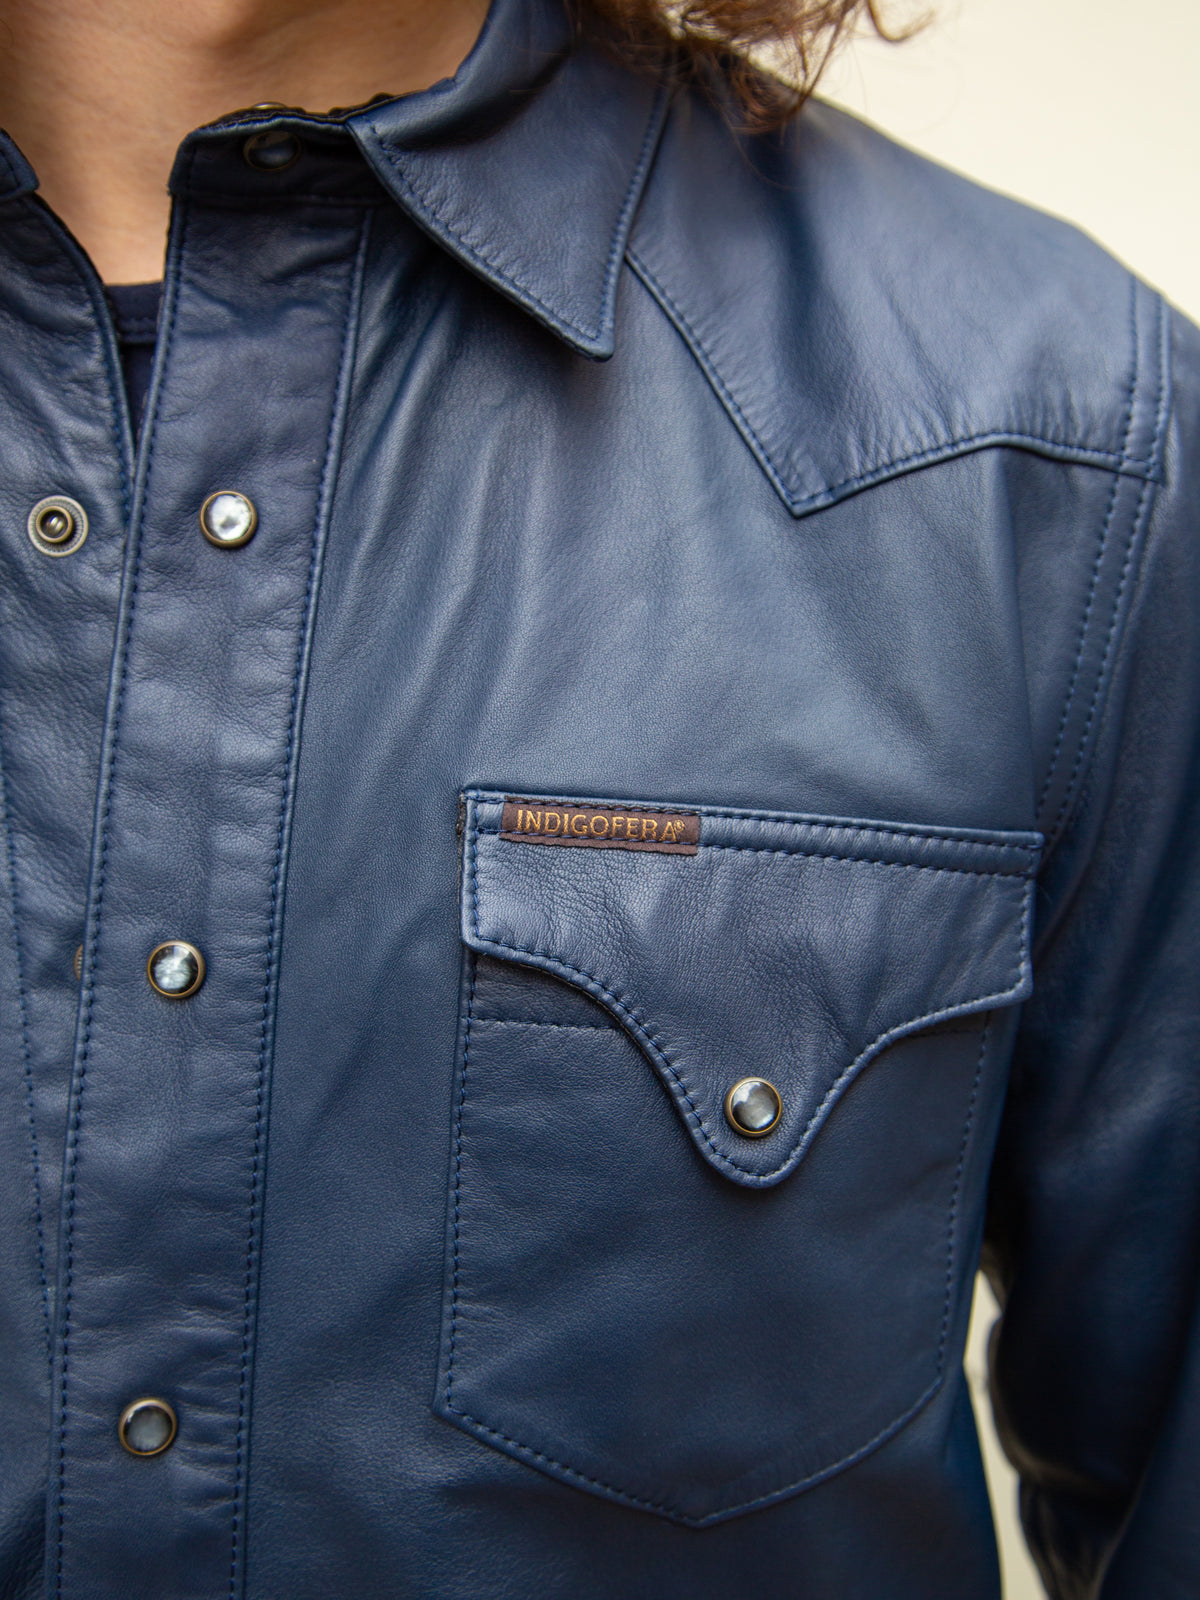 Indigofera Hawley Leather Shirt - Navy